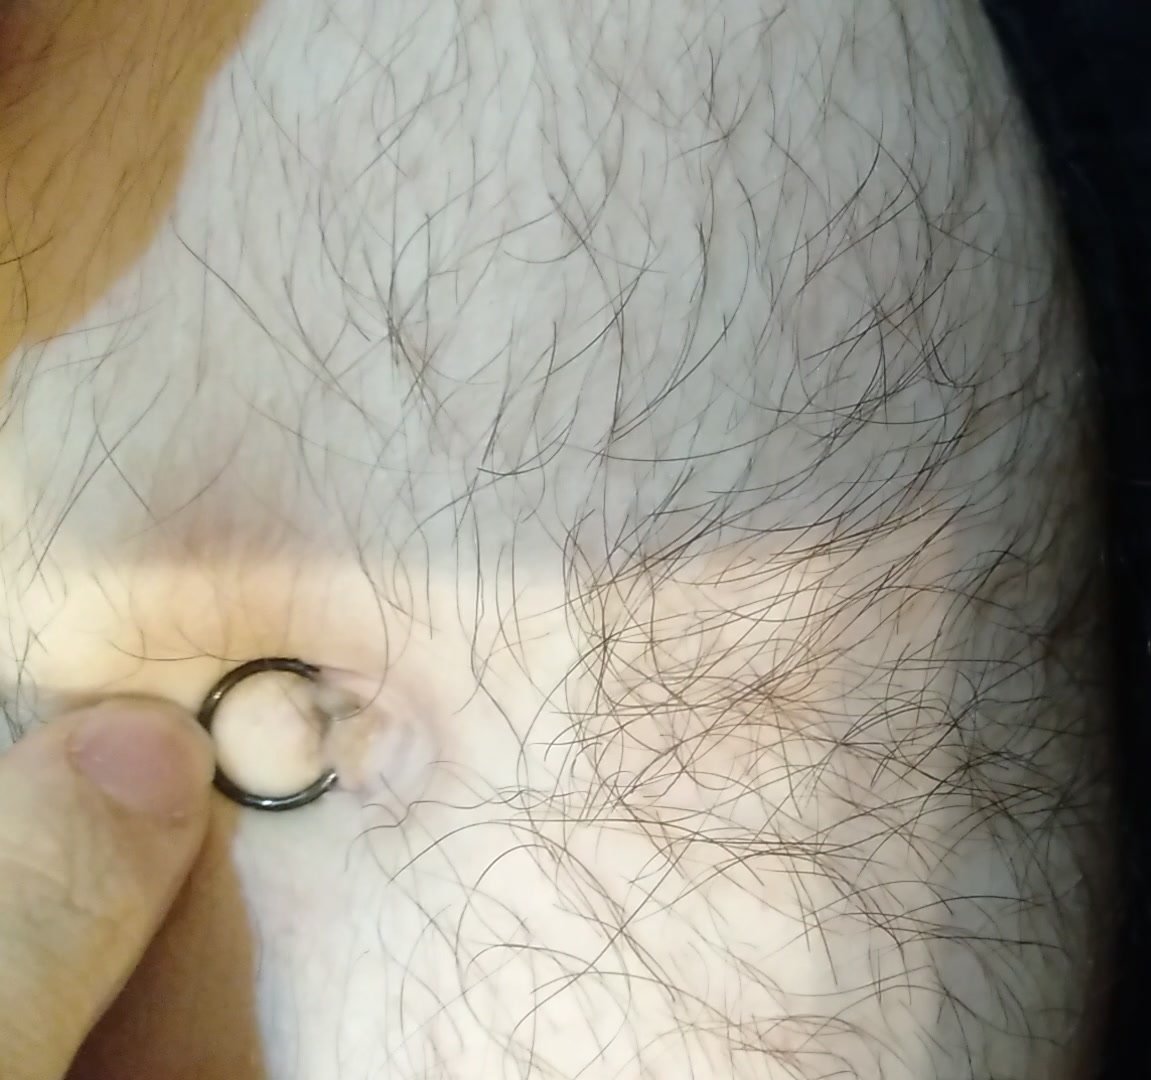 Cleaning my true navel piercing